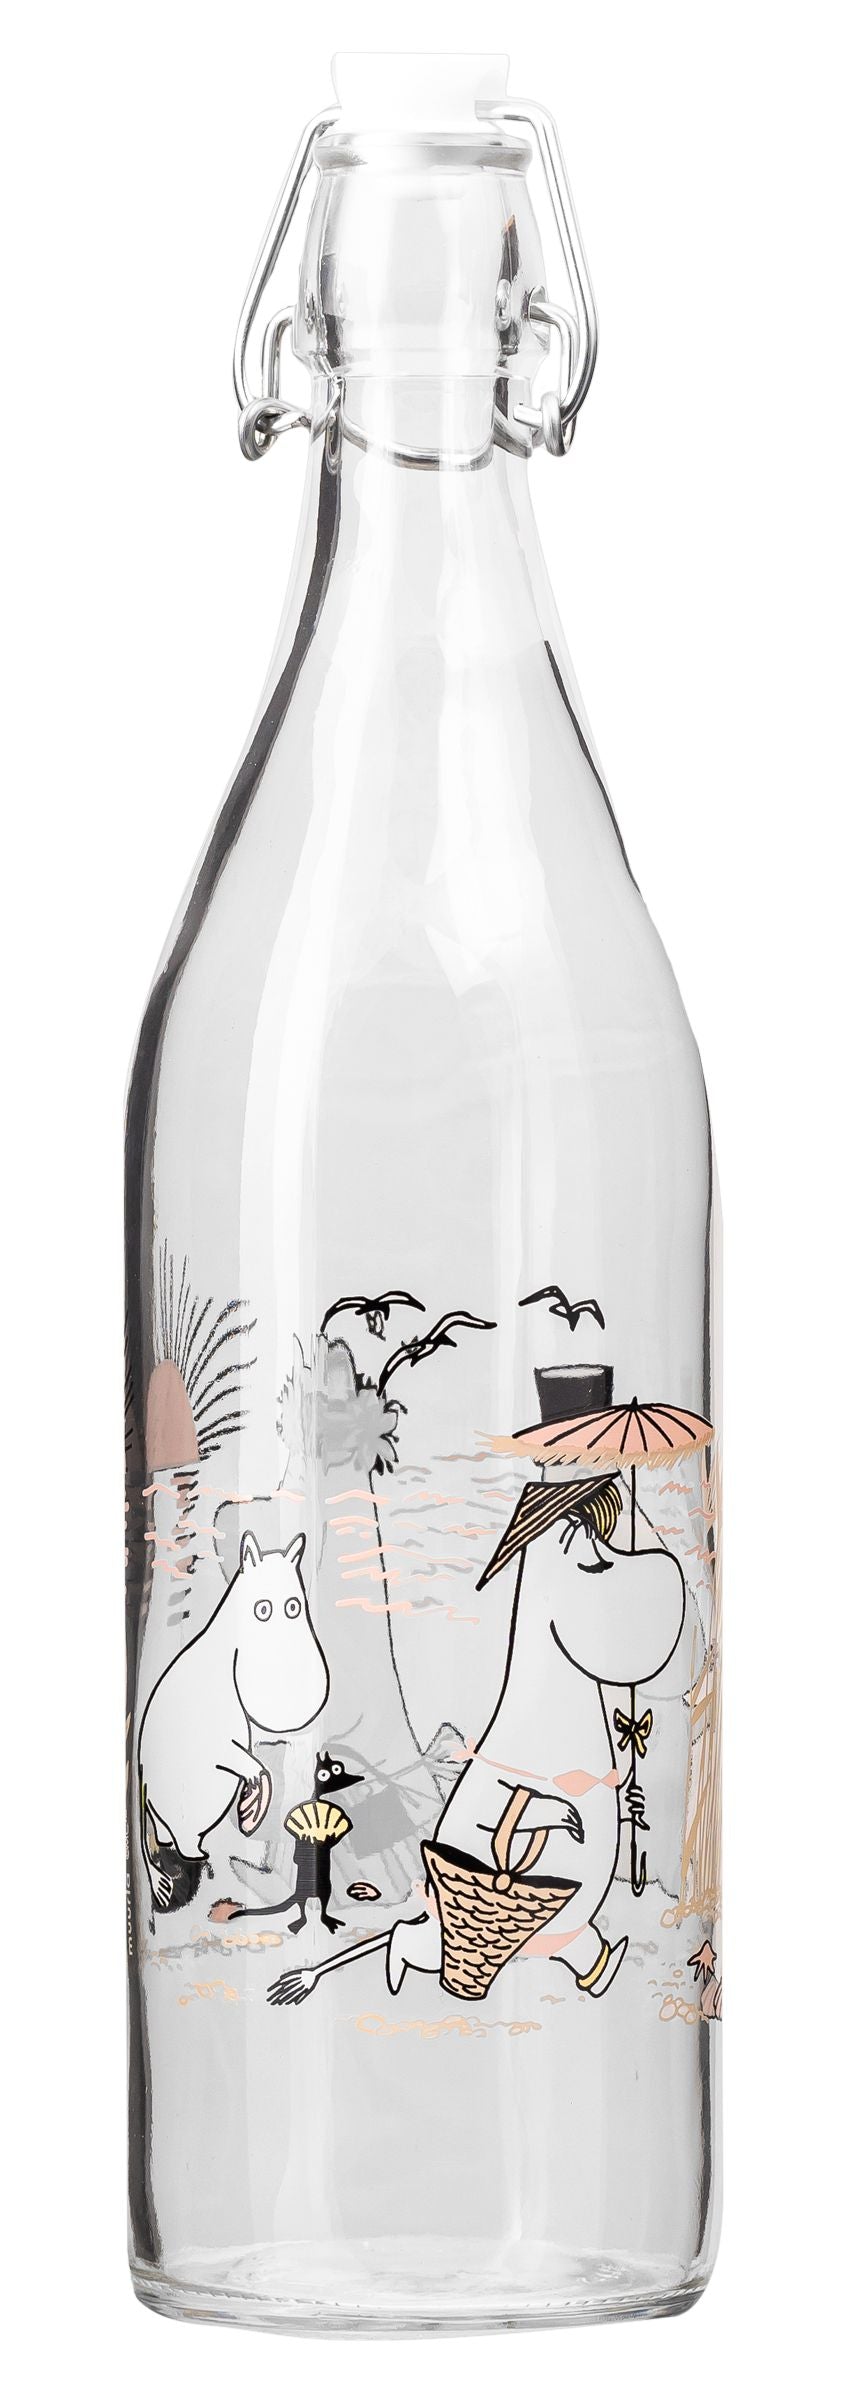 Muurla Moomin glassflaske, stranden